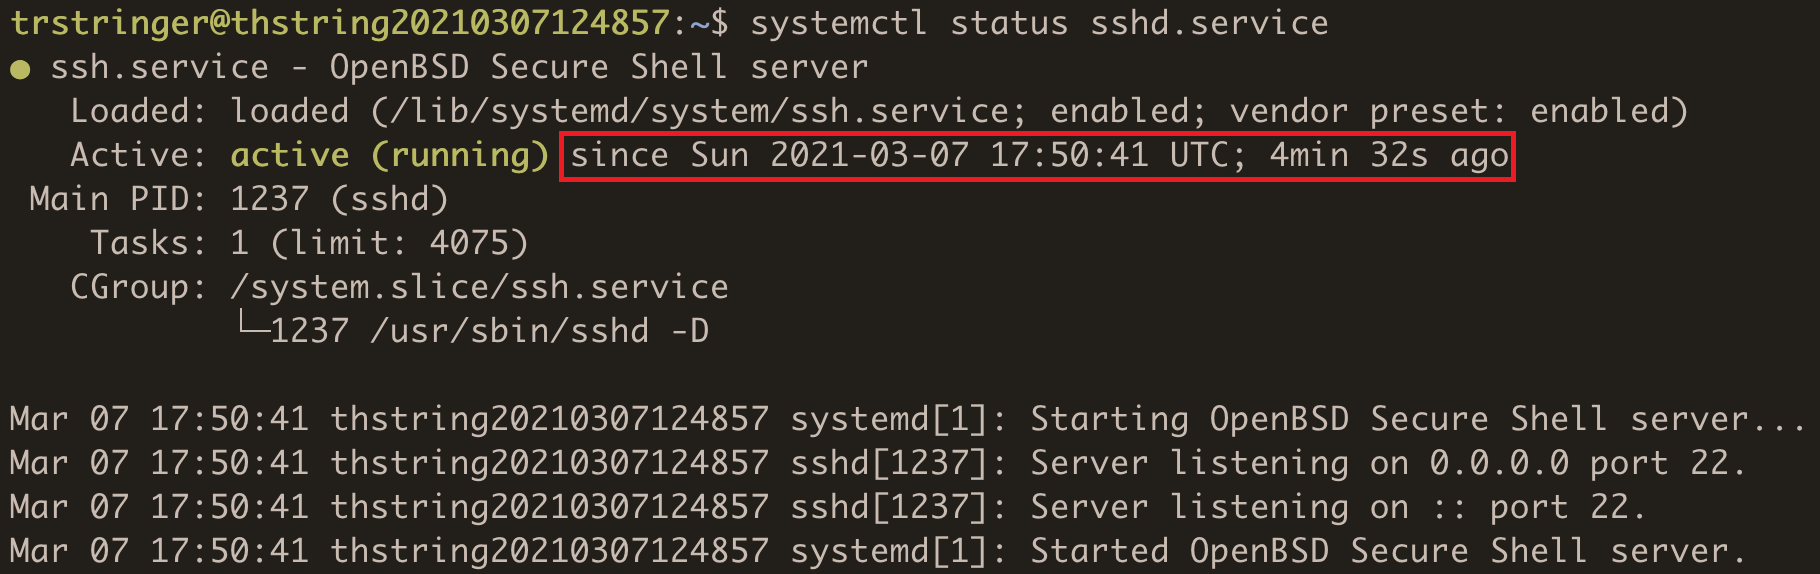 ssh.service status datetime